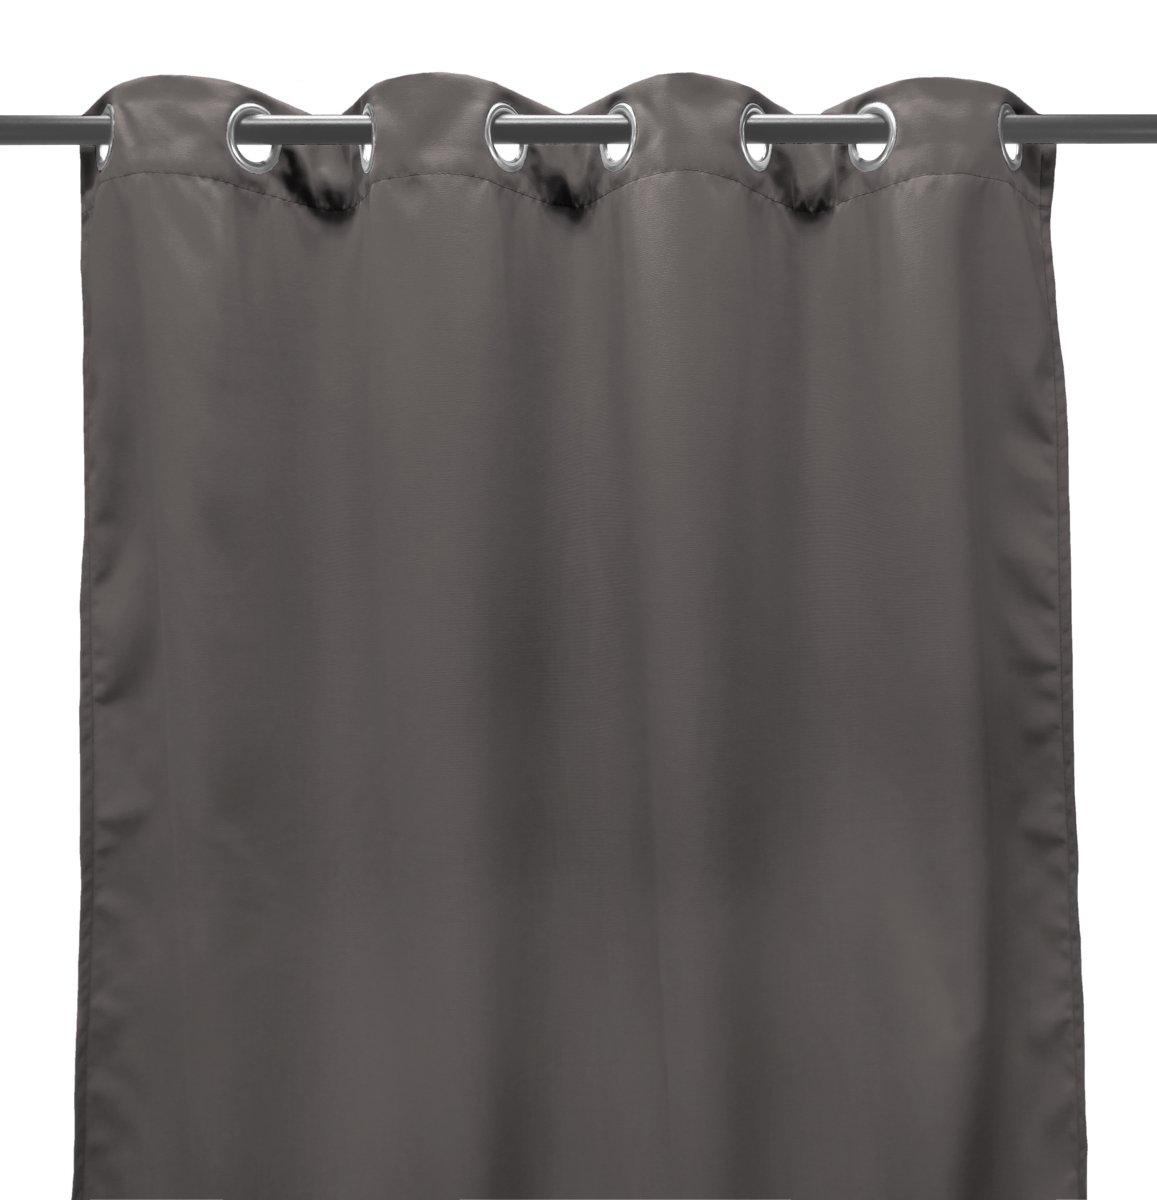 3voc5496-4337q 54 X 96 In. Outdoor Curtain Panel In Gray